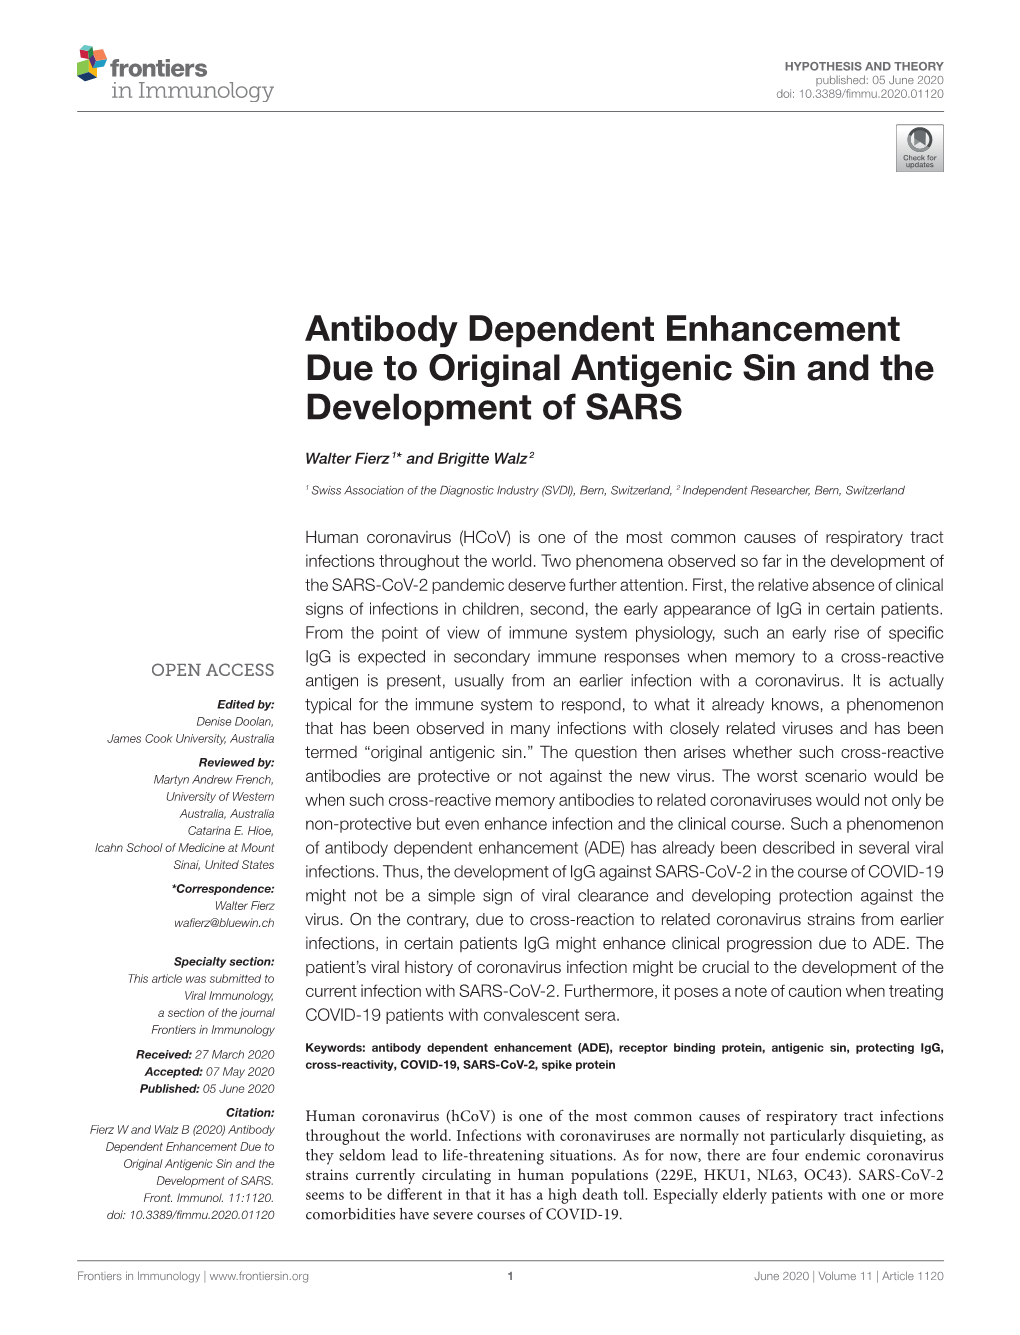 Antibody Dependent Enhancement Due to Original Antigenic Sin and the Development of SARS